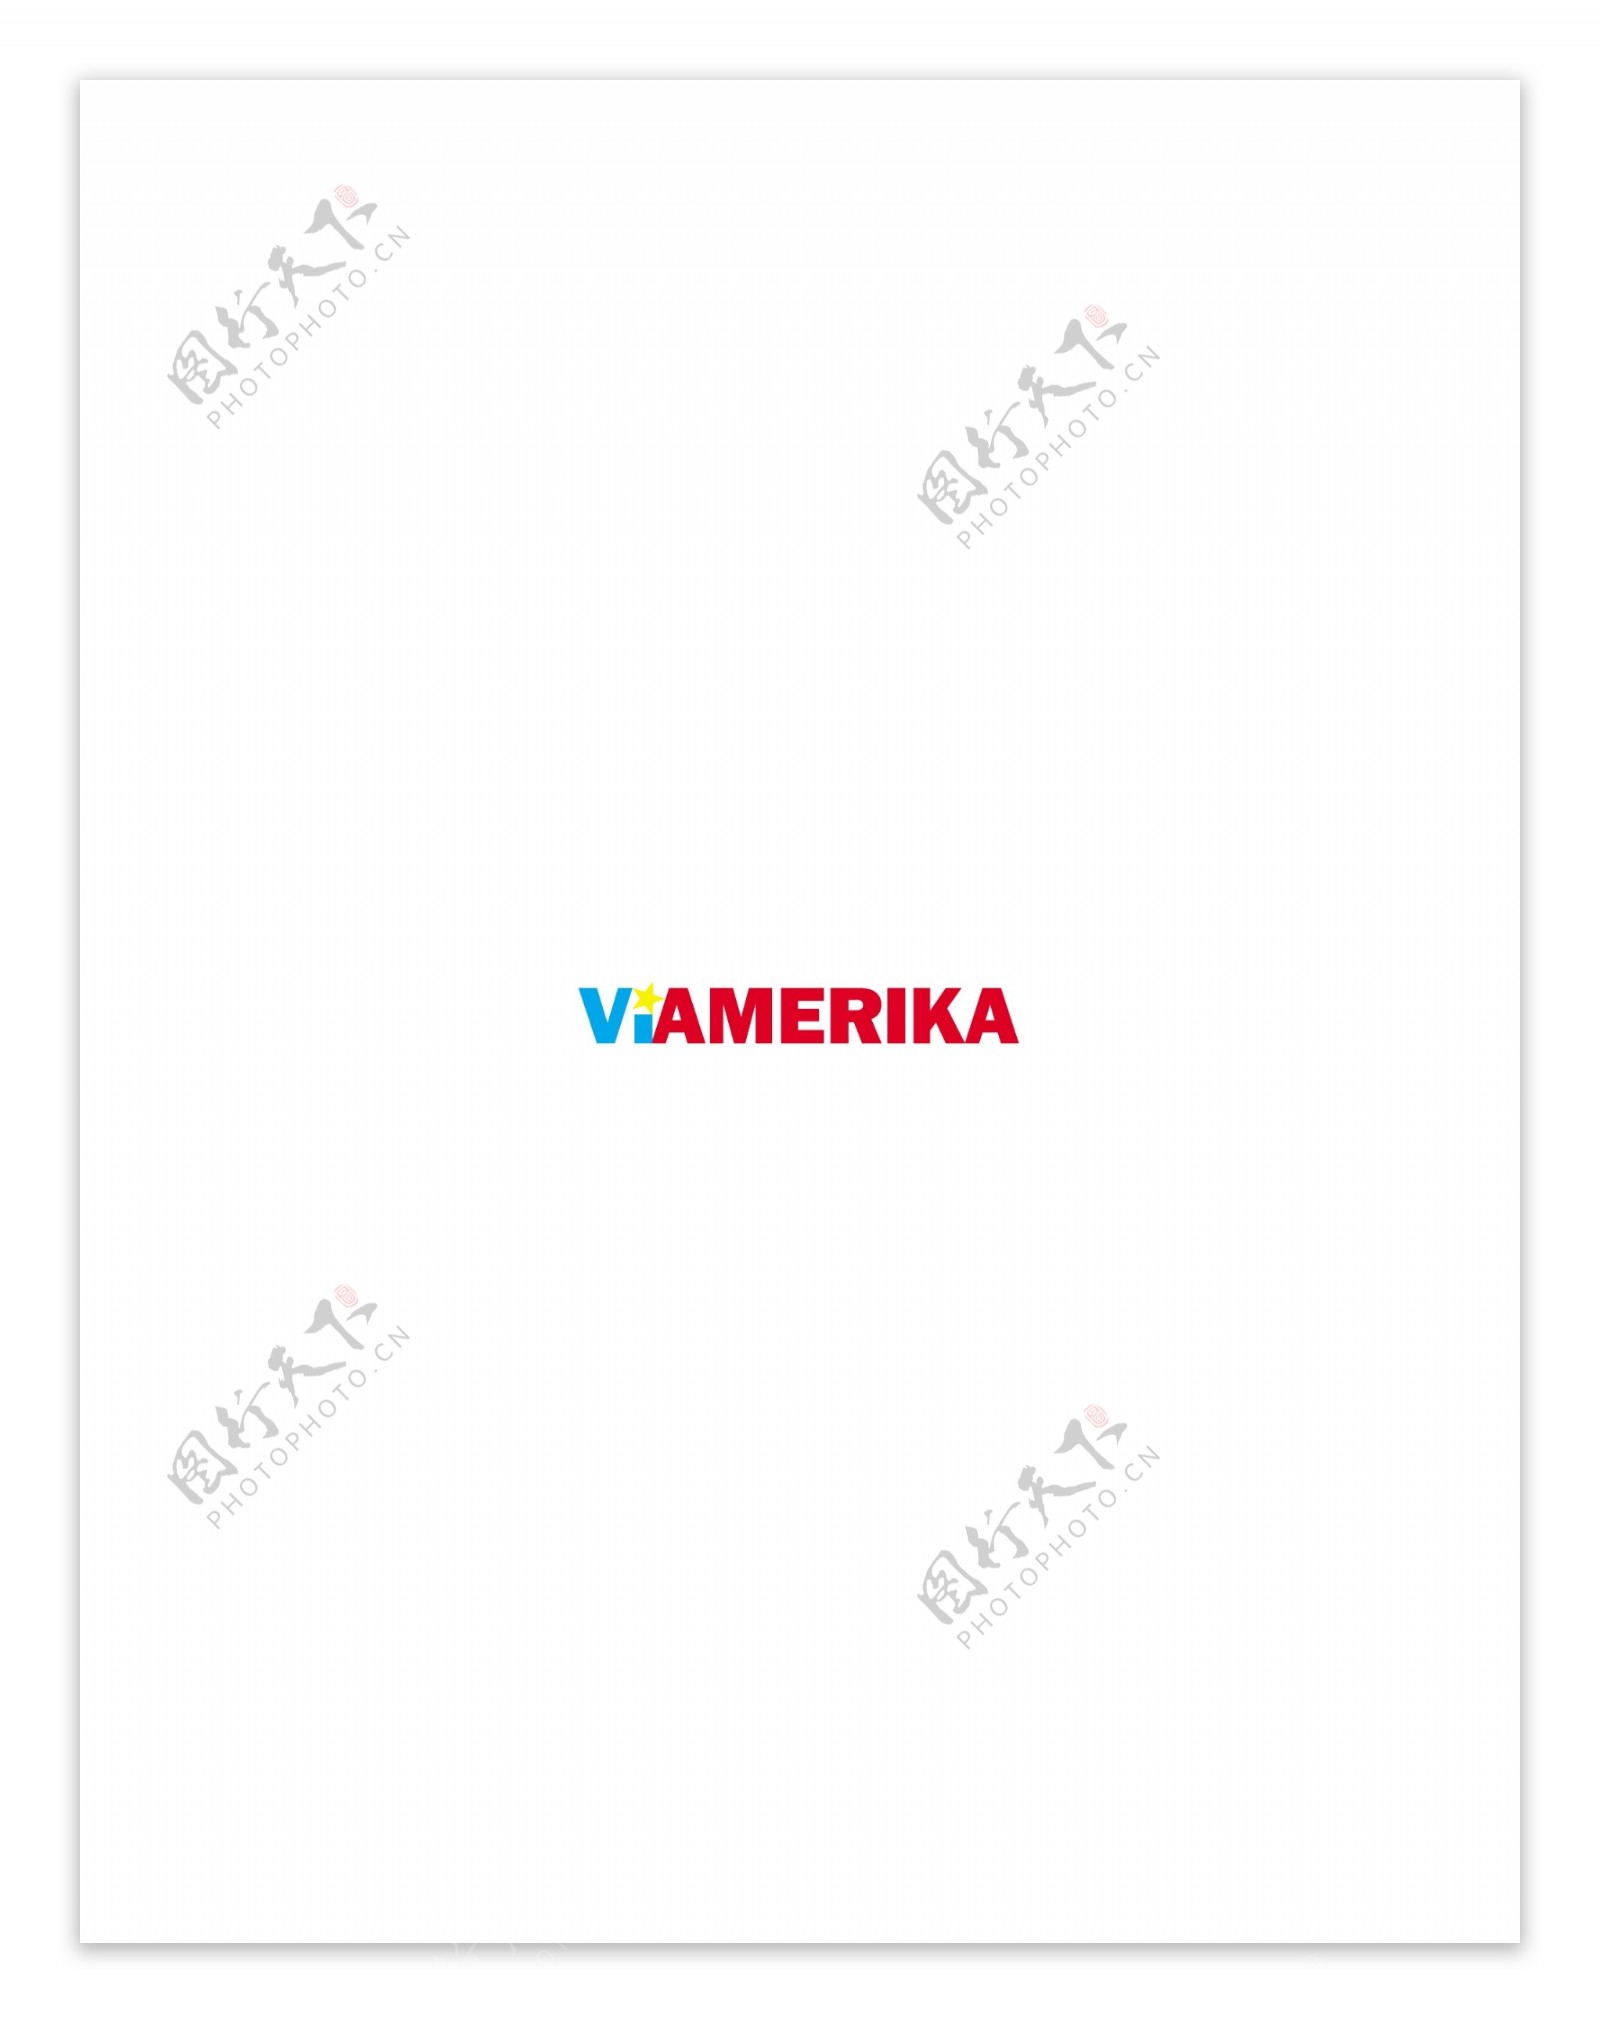 ViAmerikalogo设计欣赏足球队队徽LOGO设计ViAmerika下载标志设计欣赏